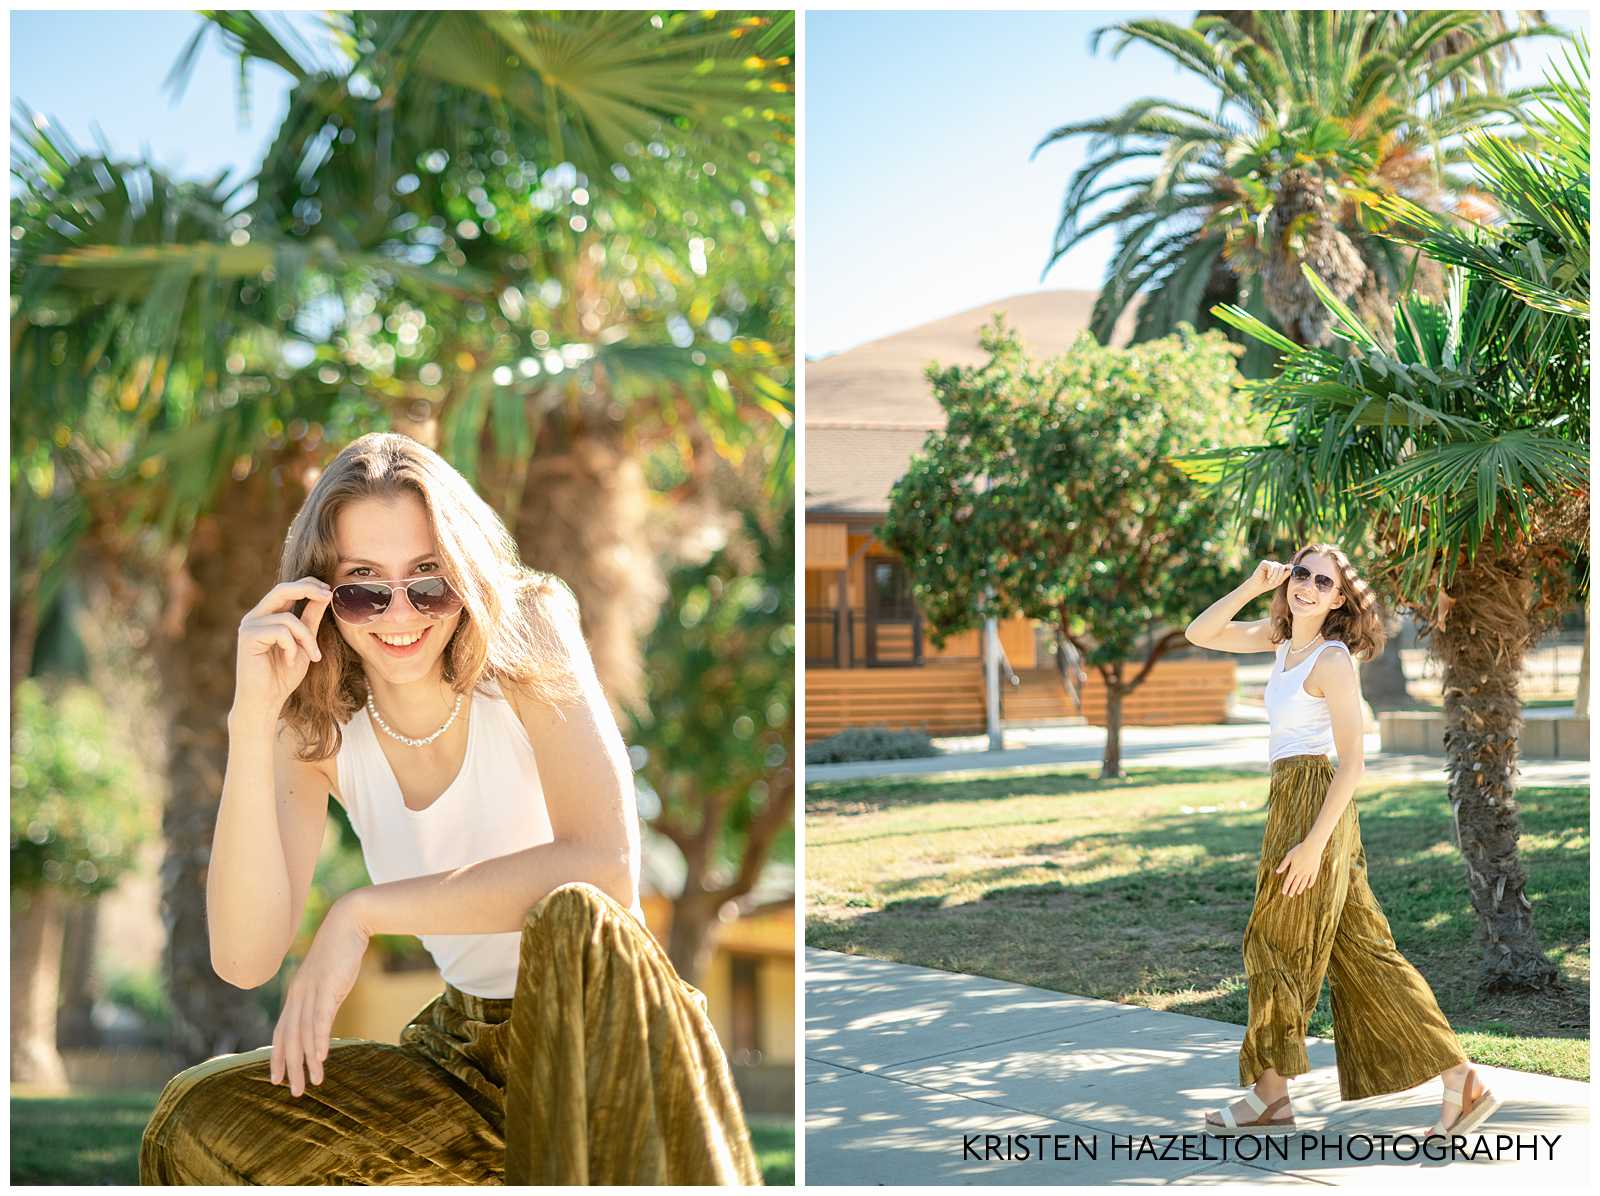 High school senior girl posing with aviator sunglasses and palm trees